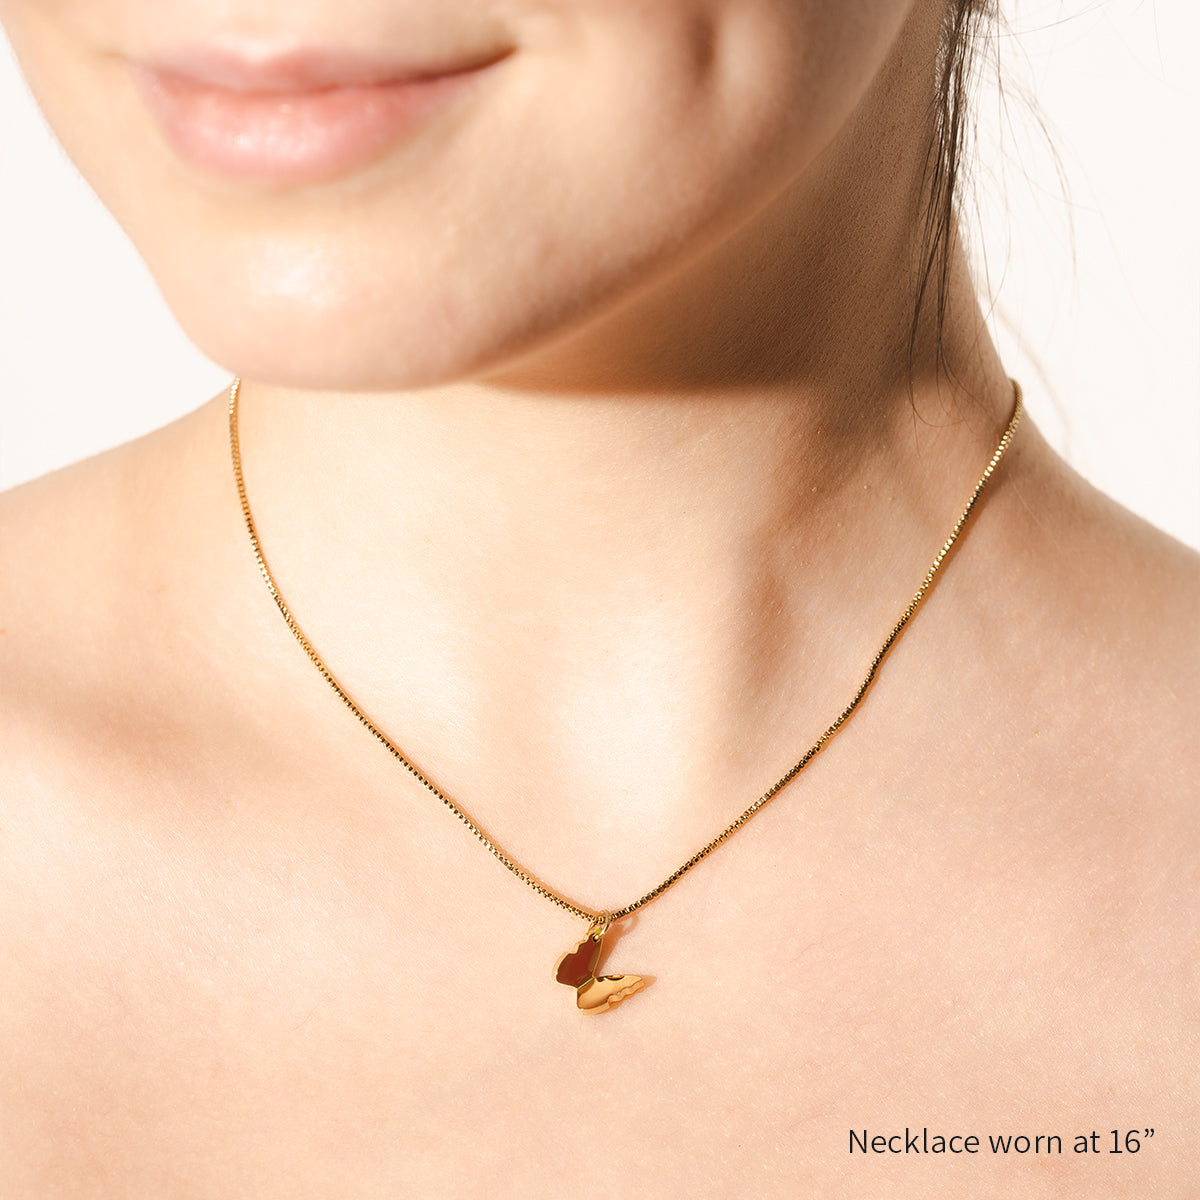 Lillia Butterfly Shape Best Friend Set | 14K Gold Necklace & Pet Tag | Pet Accessories - Dogily